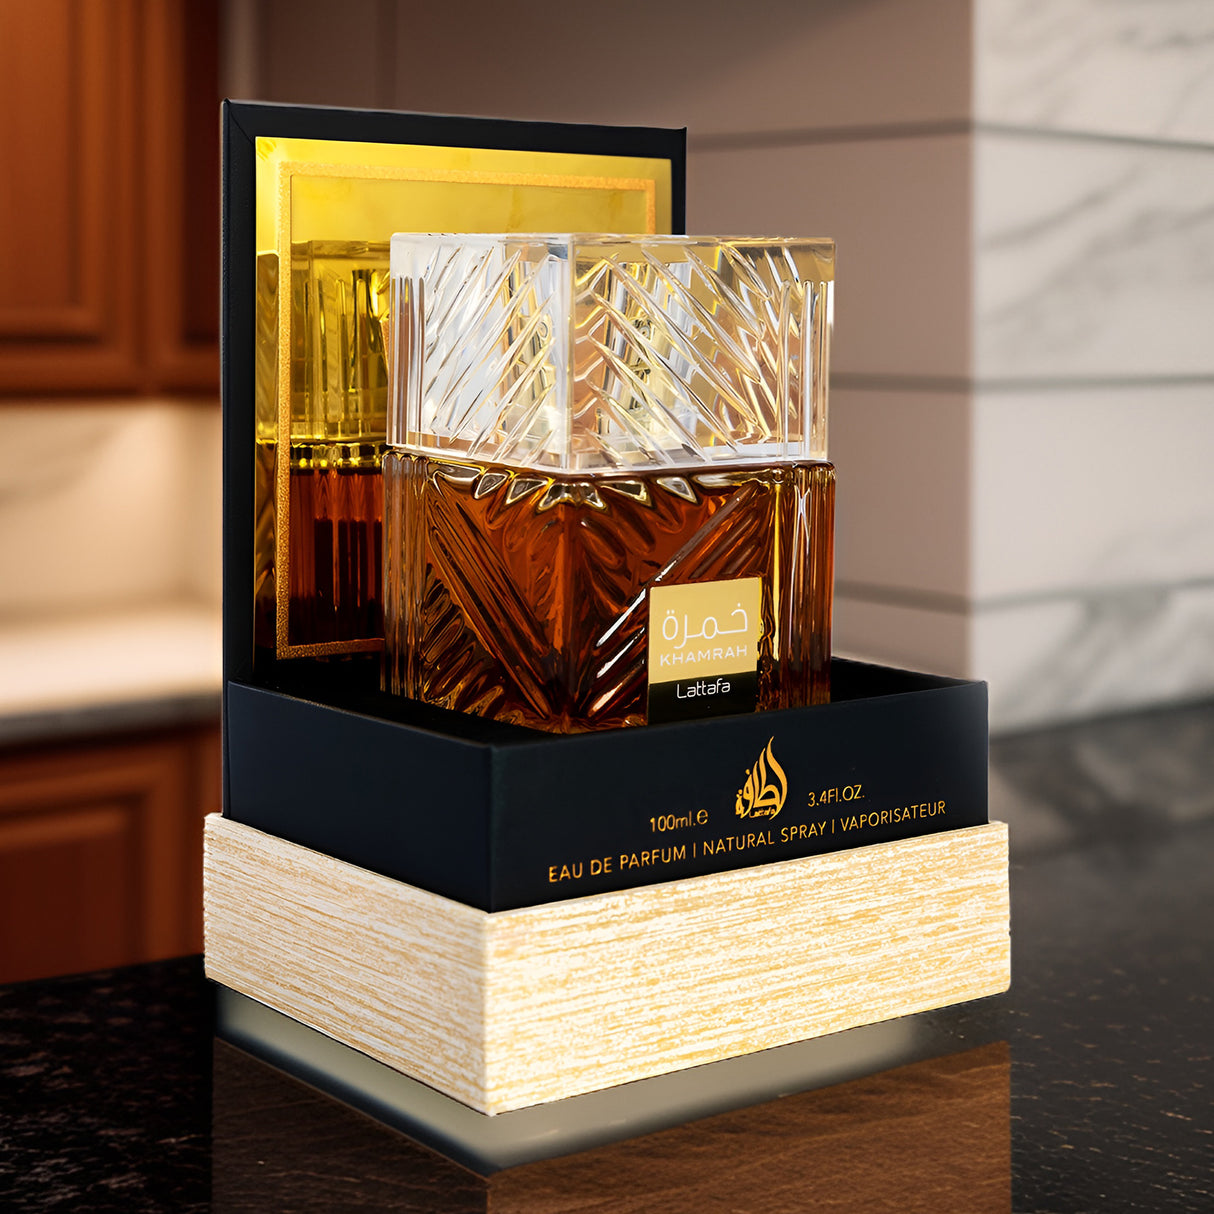 Khamrah Perfume By Lattafa - Authentic & Luxury - Unisex Eau De Parfum - 3.4Fl Oz / 100ml